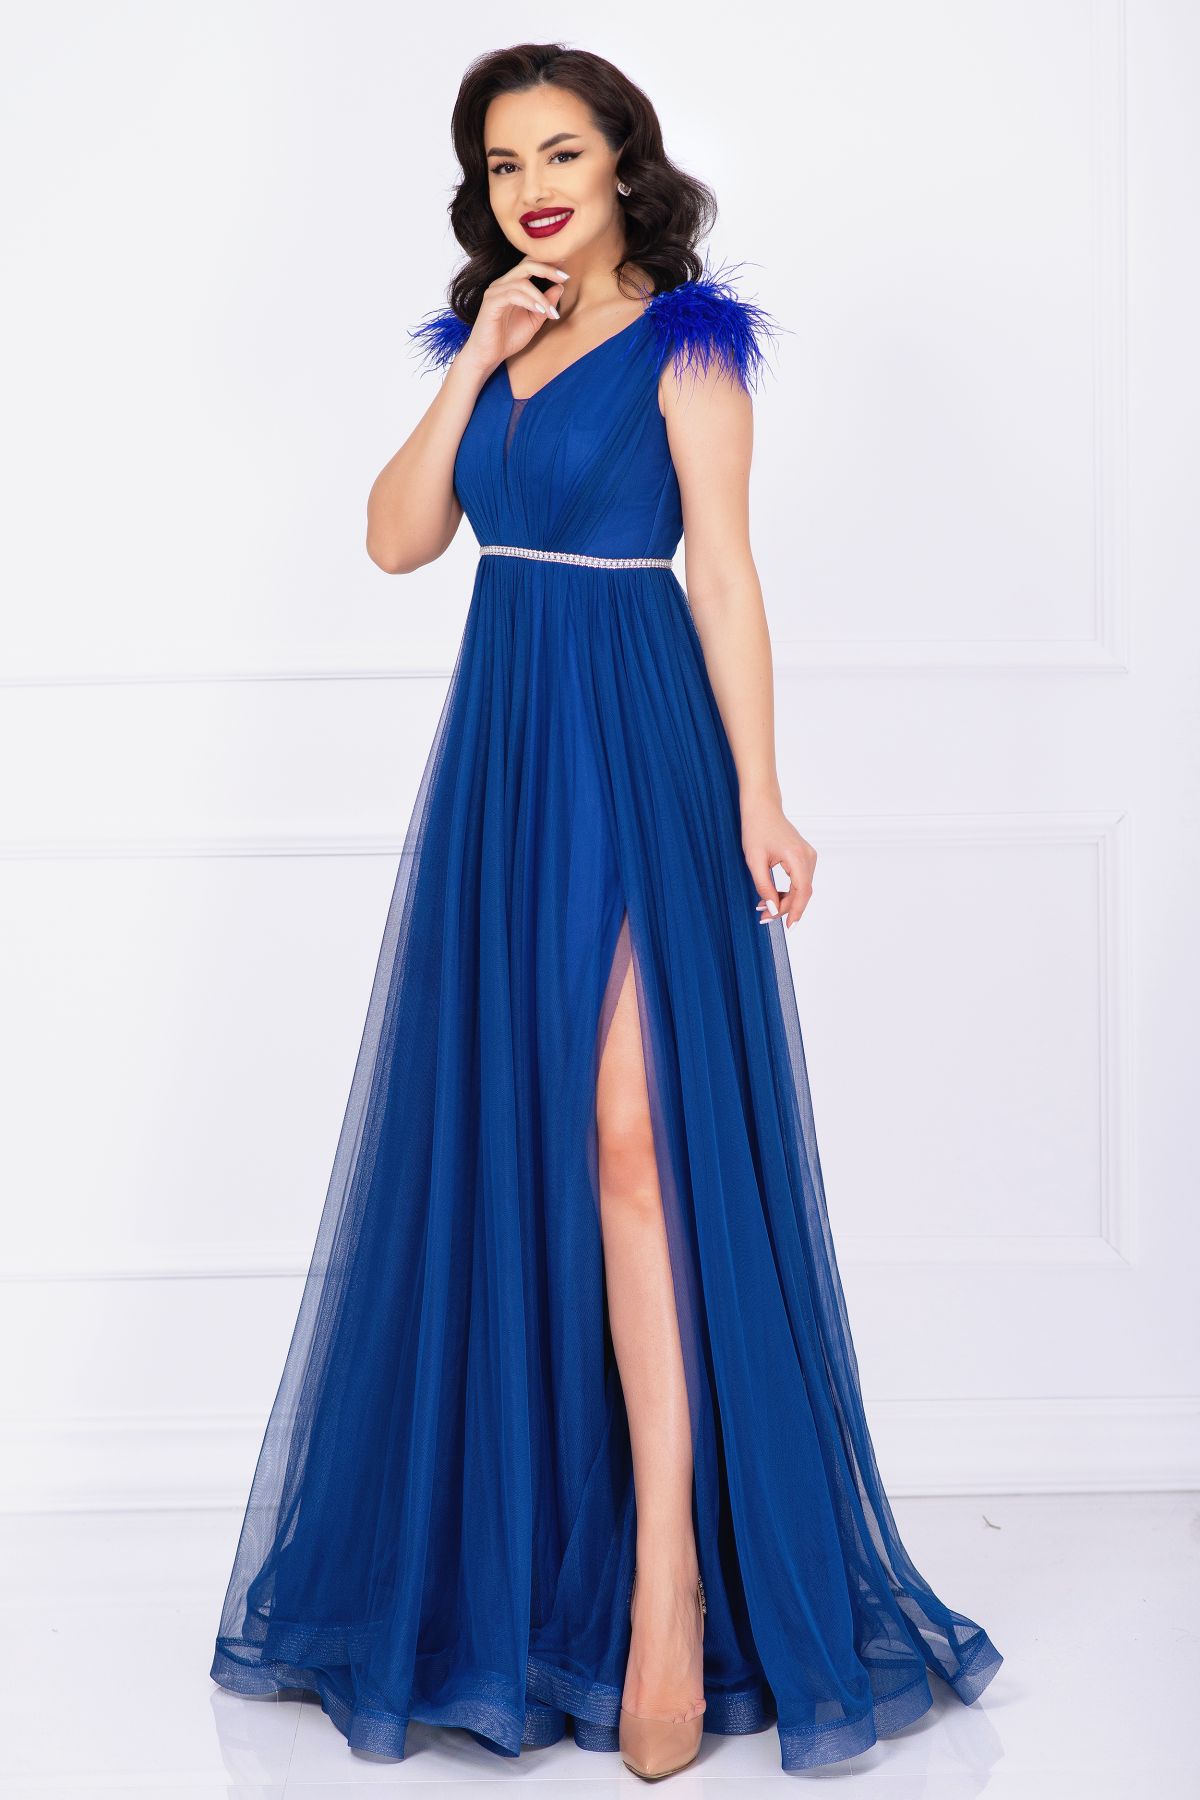 Rochie de seara Gratiela albastru royal cu perle in talie si accesoriu tip fulgi image11